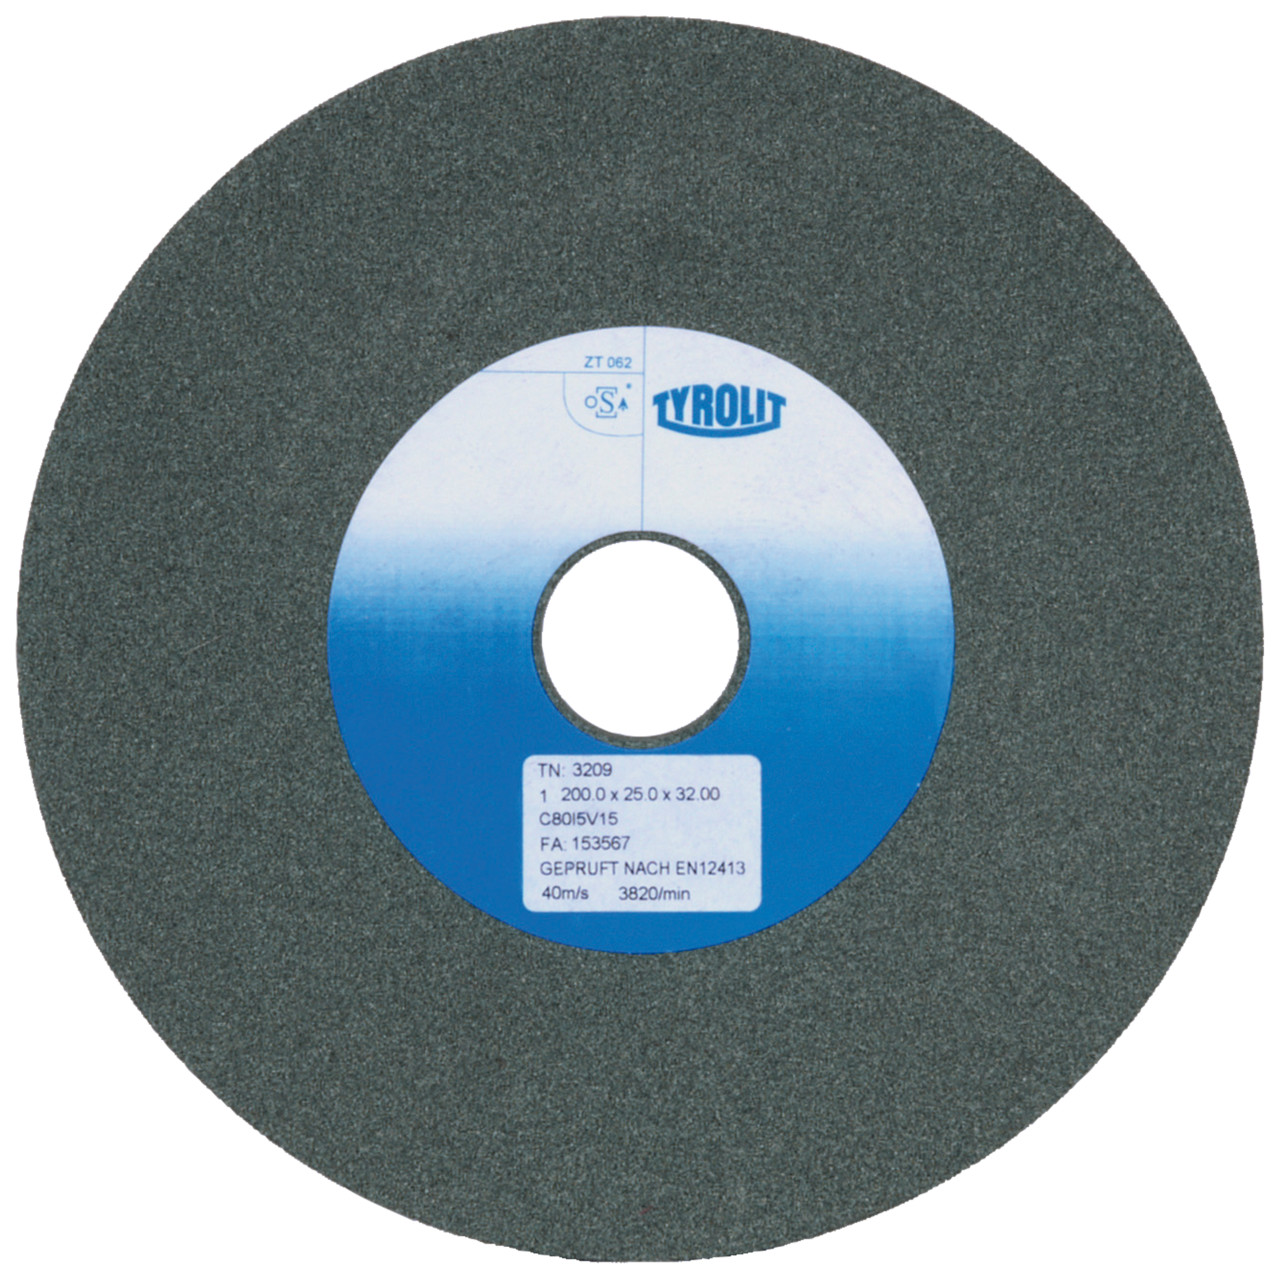 TYROLIT discos de desbaste cerámicos convencionales DxDxH 200x25x51 Para metales no férricos, forma: 1, Art. 34287490